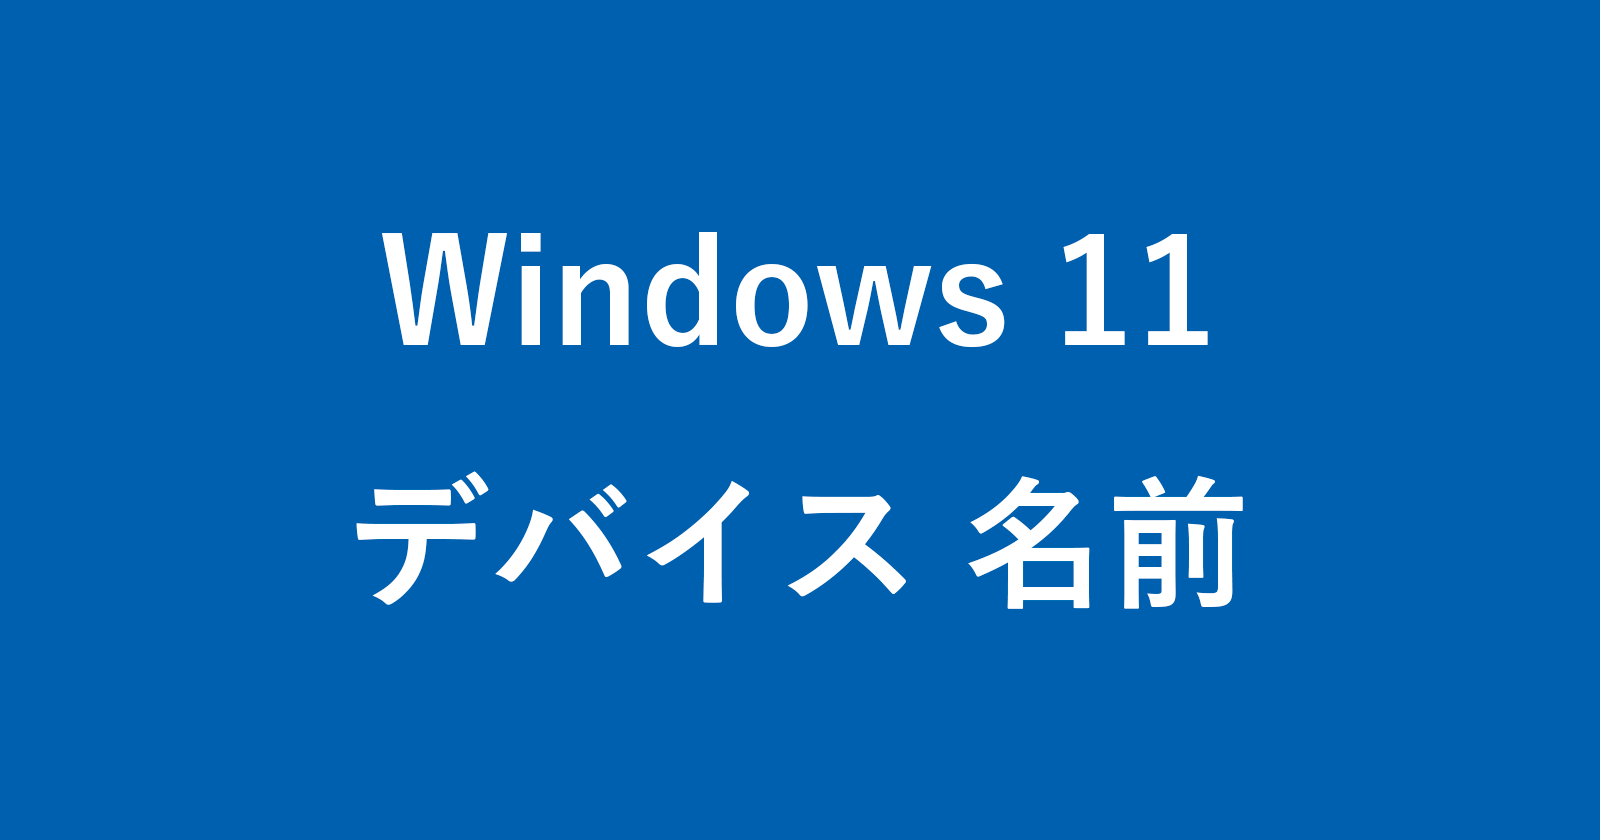 windows 11 device name